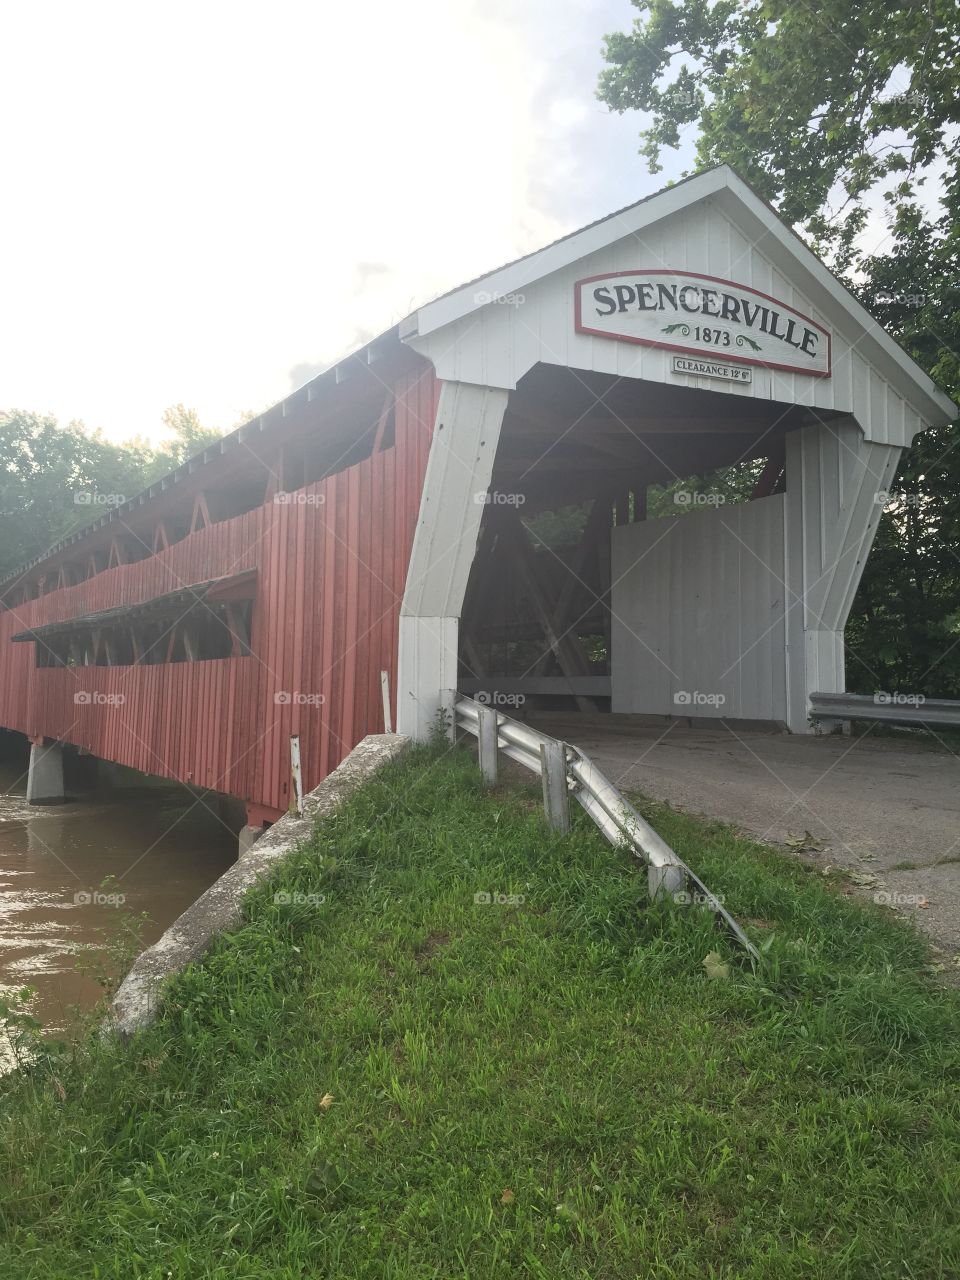 Spencerville Covered Bridge. A historic bridge located in Spencerville,IN 